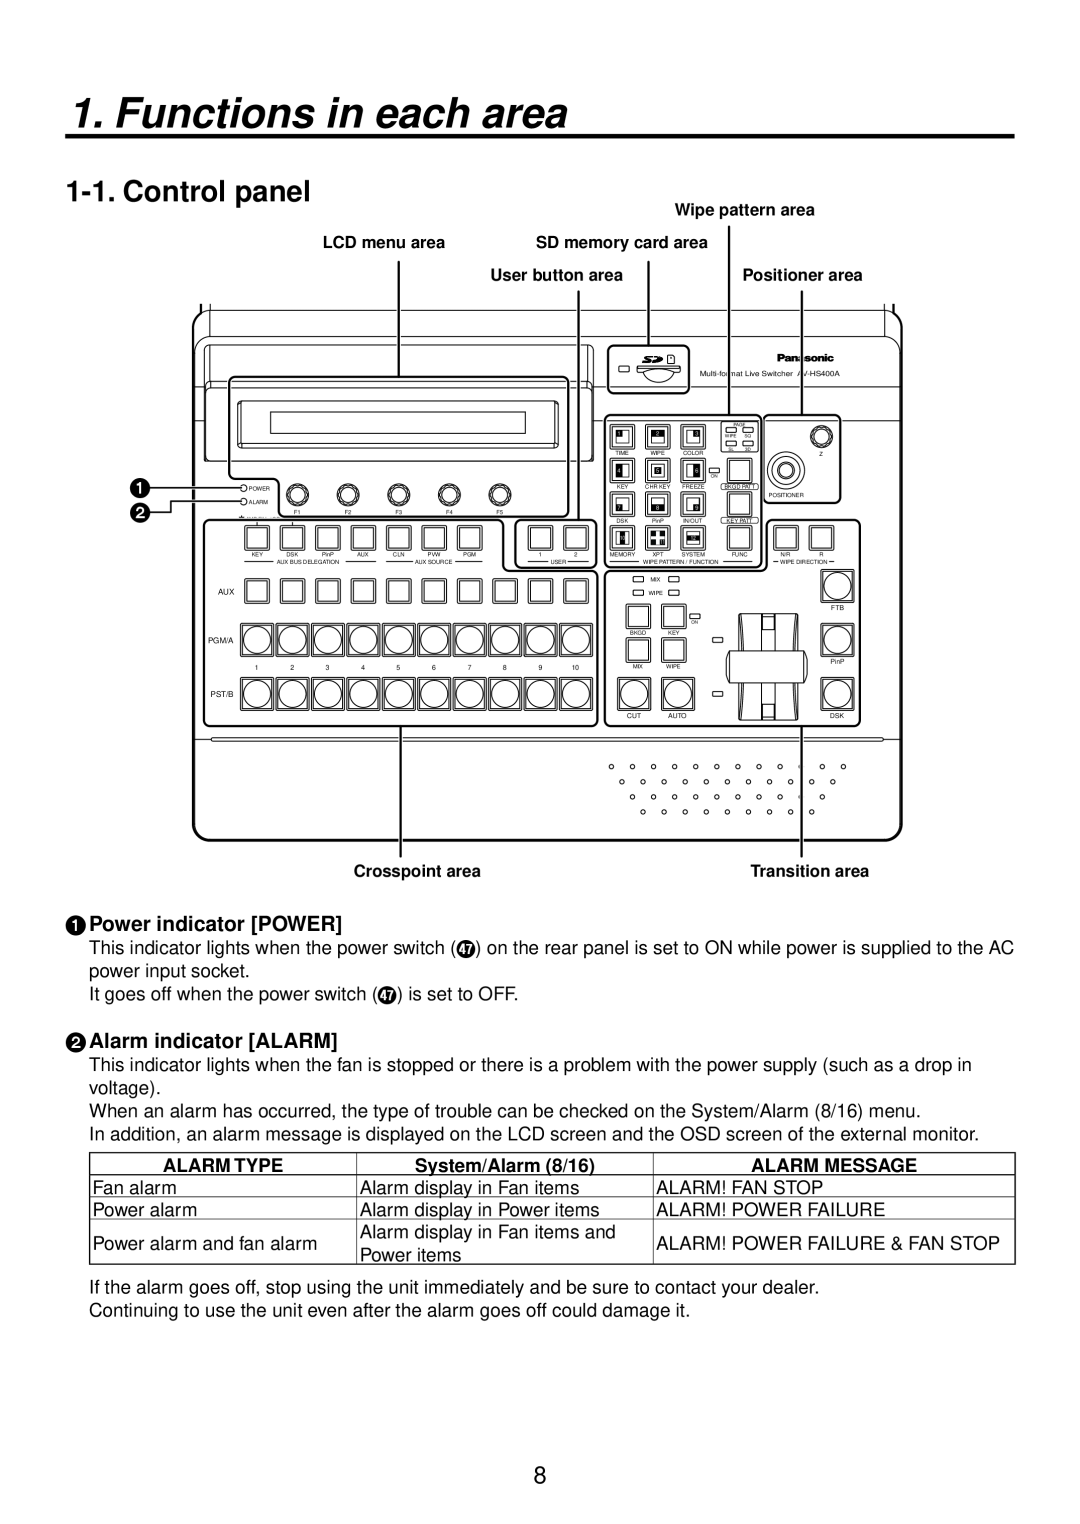 Panasonic AV-HS400AN Functions in each area, Control panel,  Power indicator POWER, 2Alarm indicator ALARM, Alarm Type 